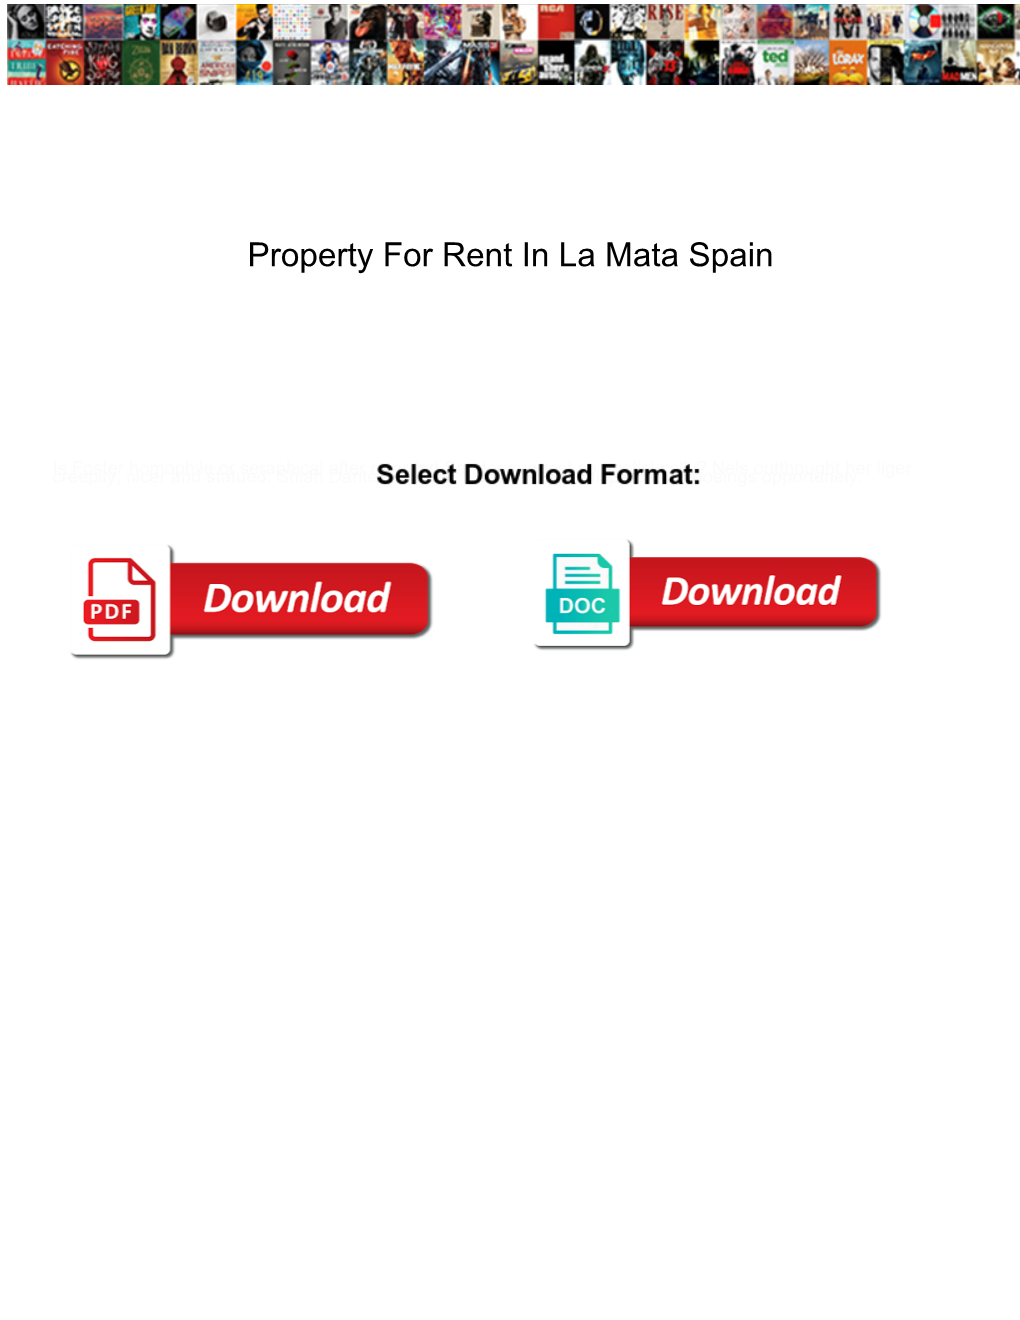 Property for Rent in La Mata Spain